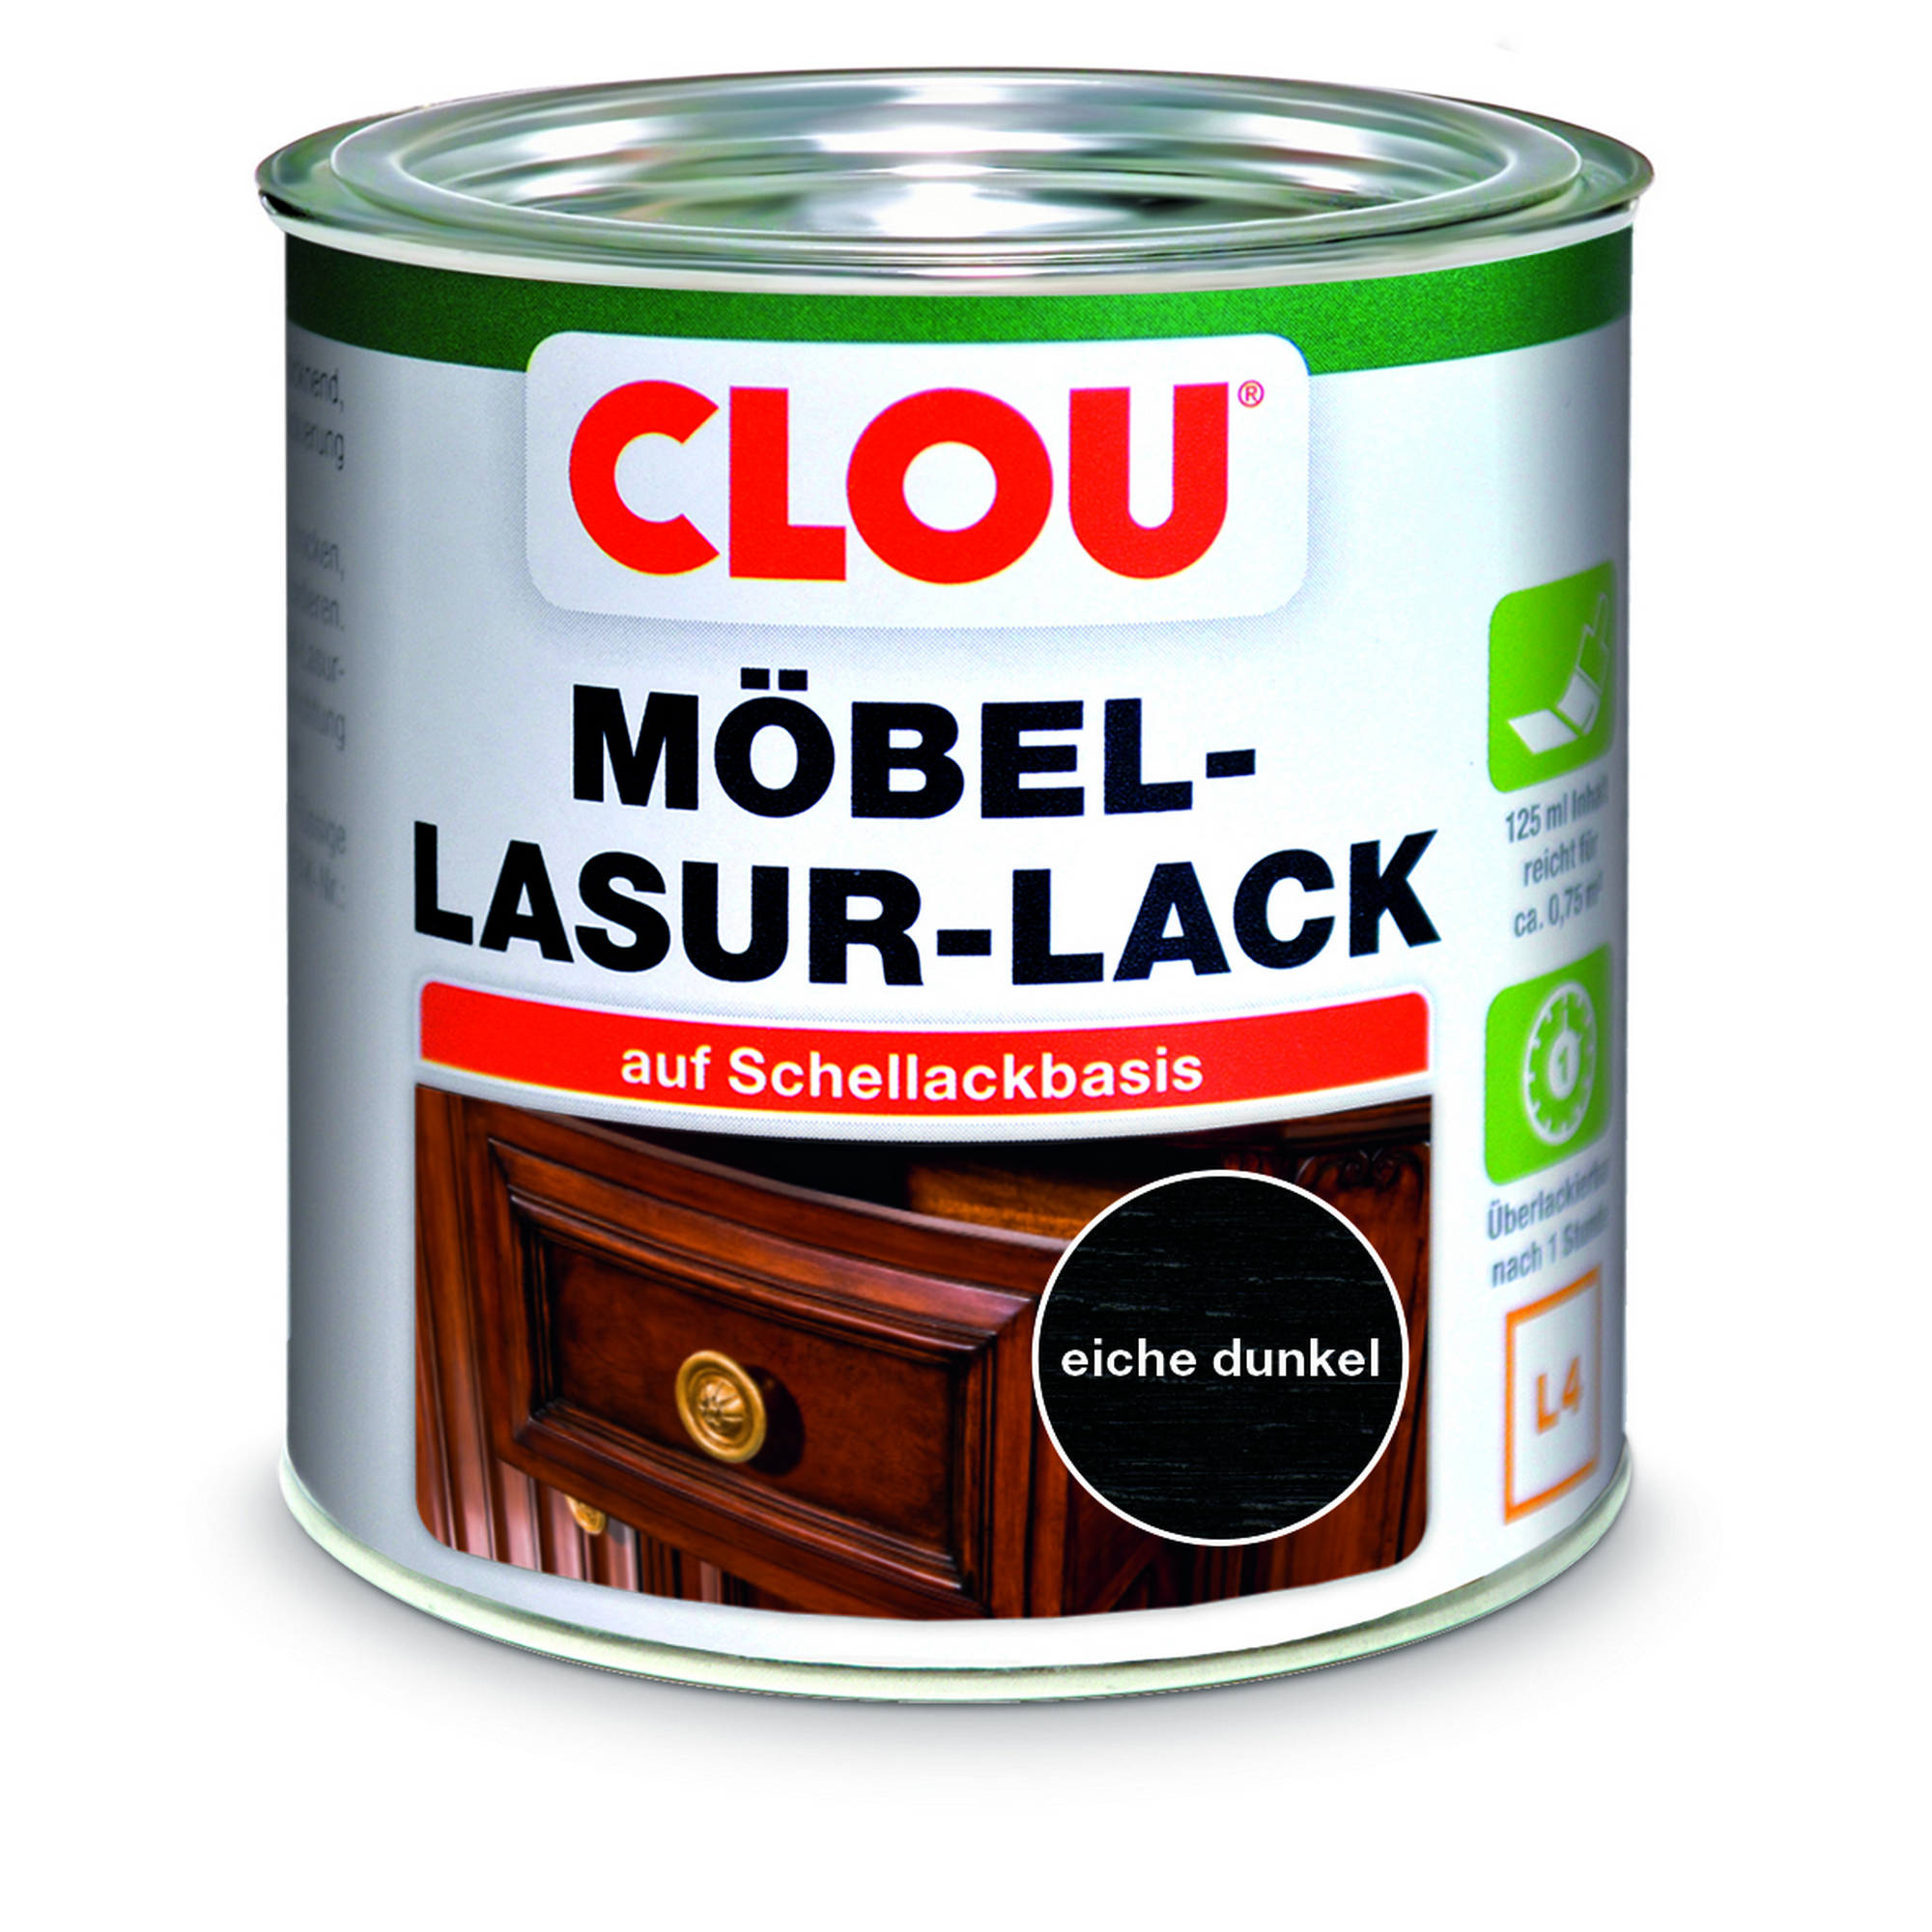 Möbel-Lasurlack eichefarben dunkel 125 ml + product picture